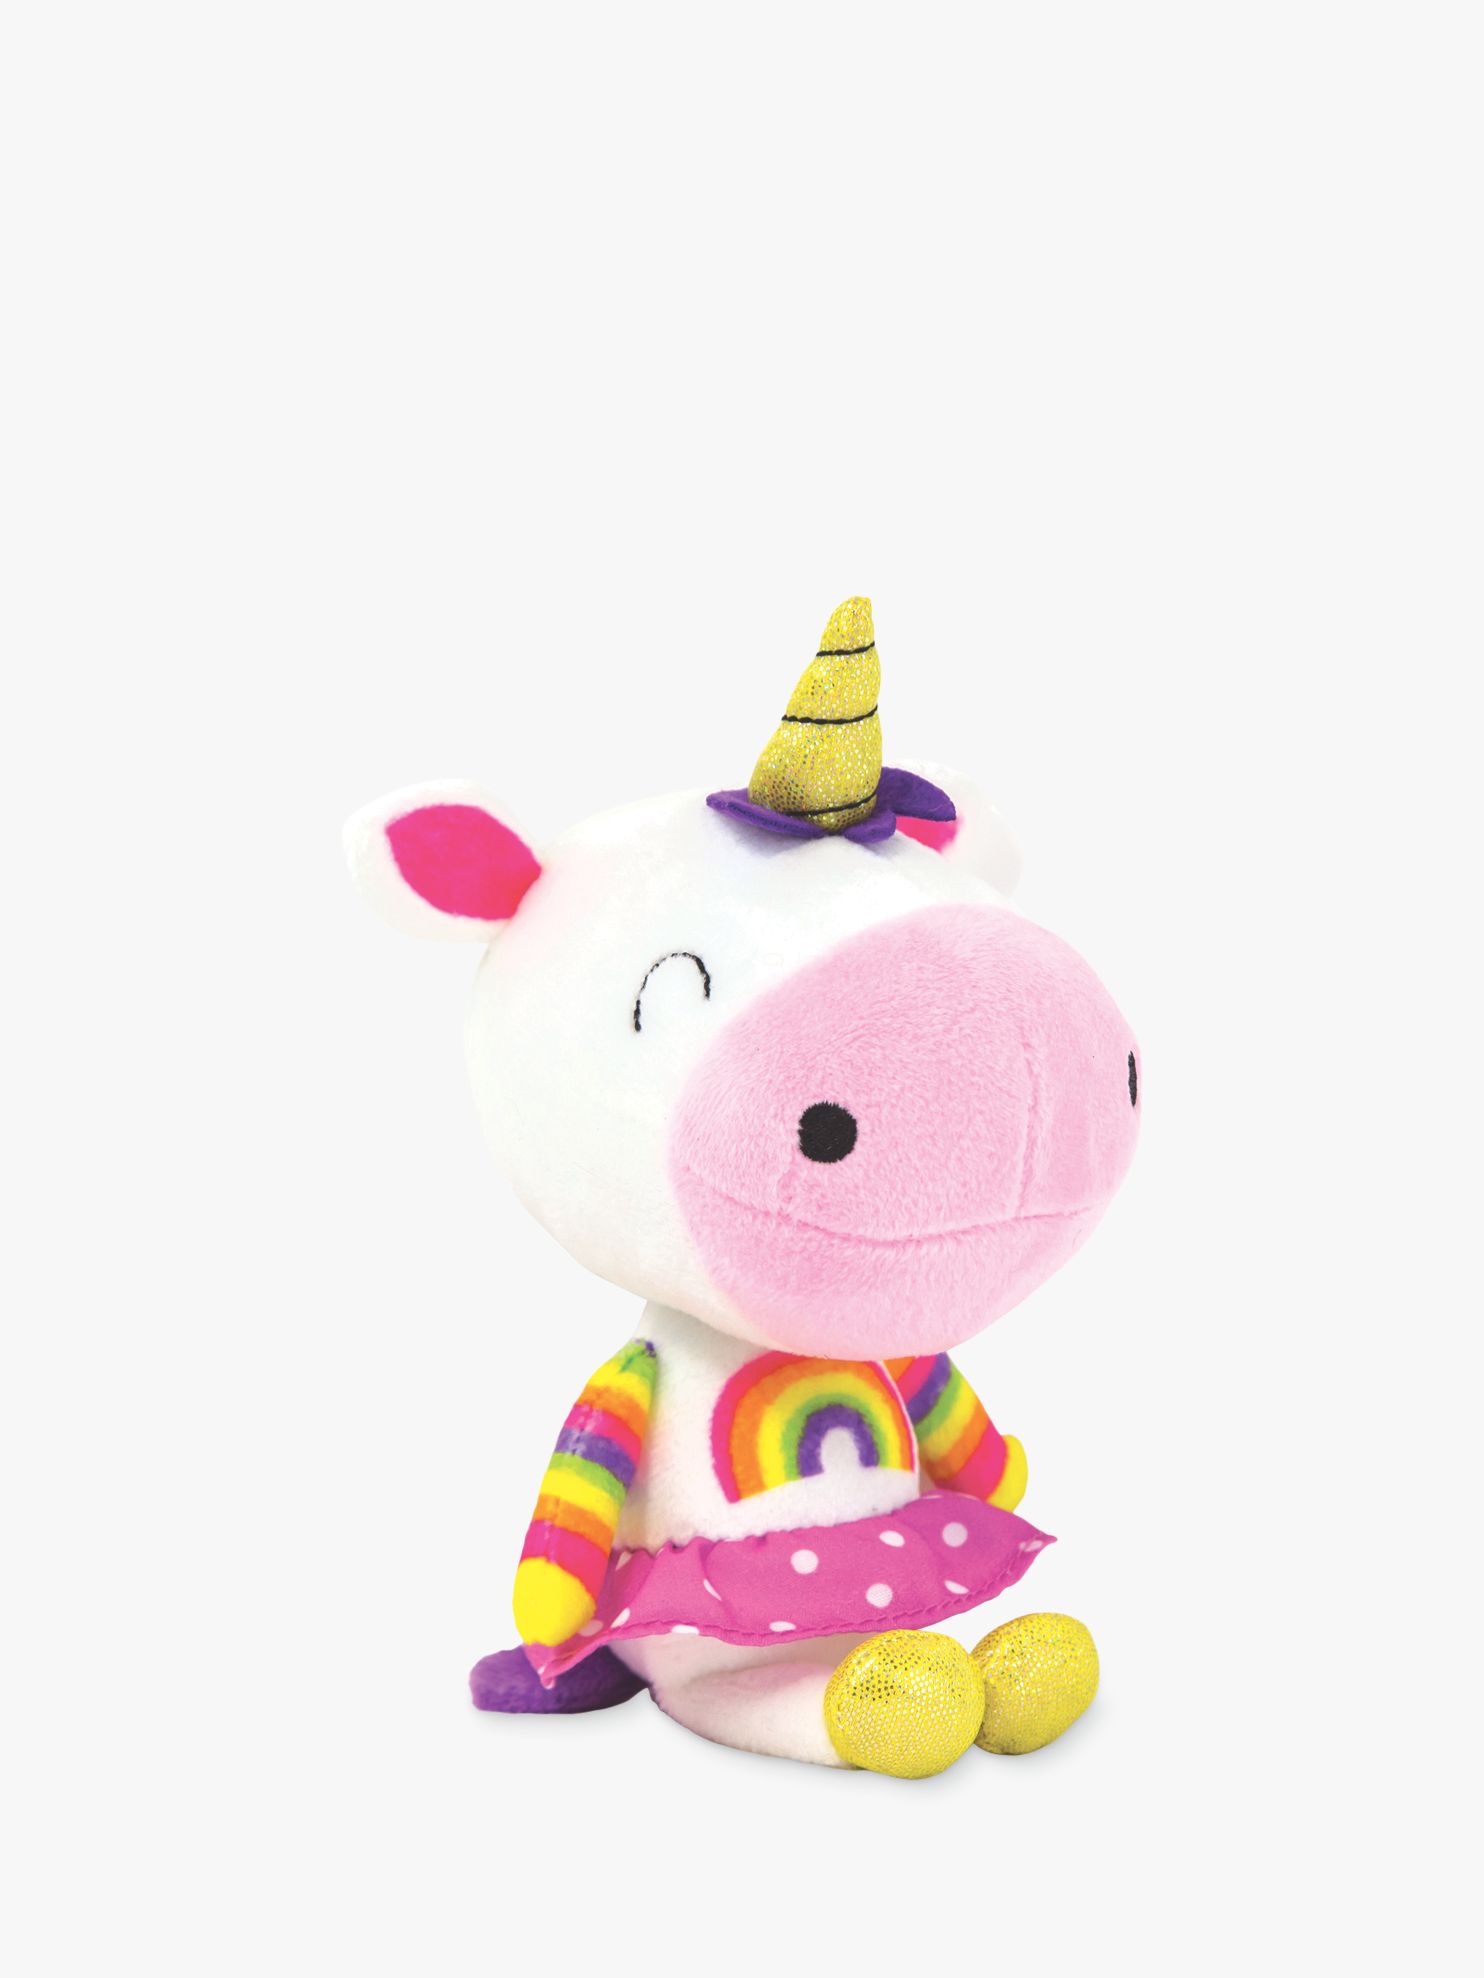 unicorn cuddly toys